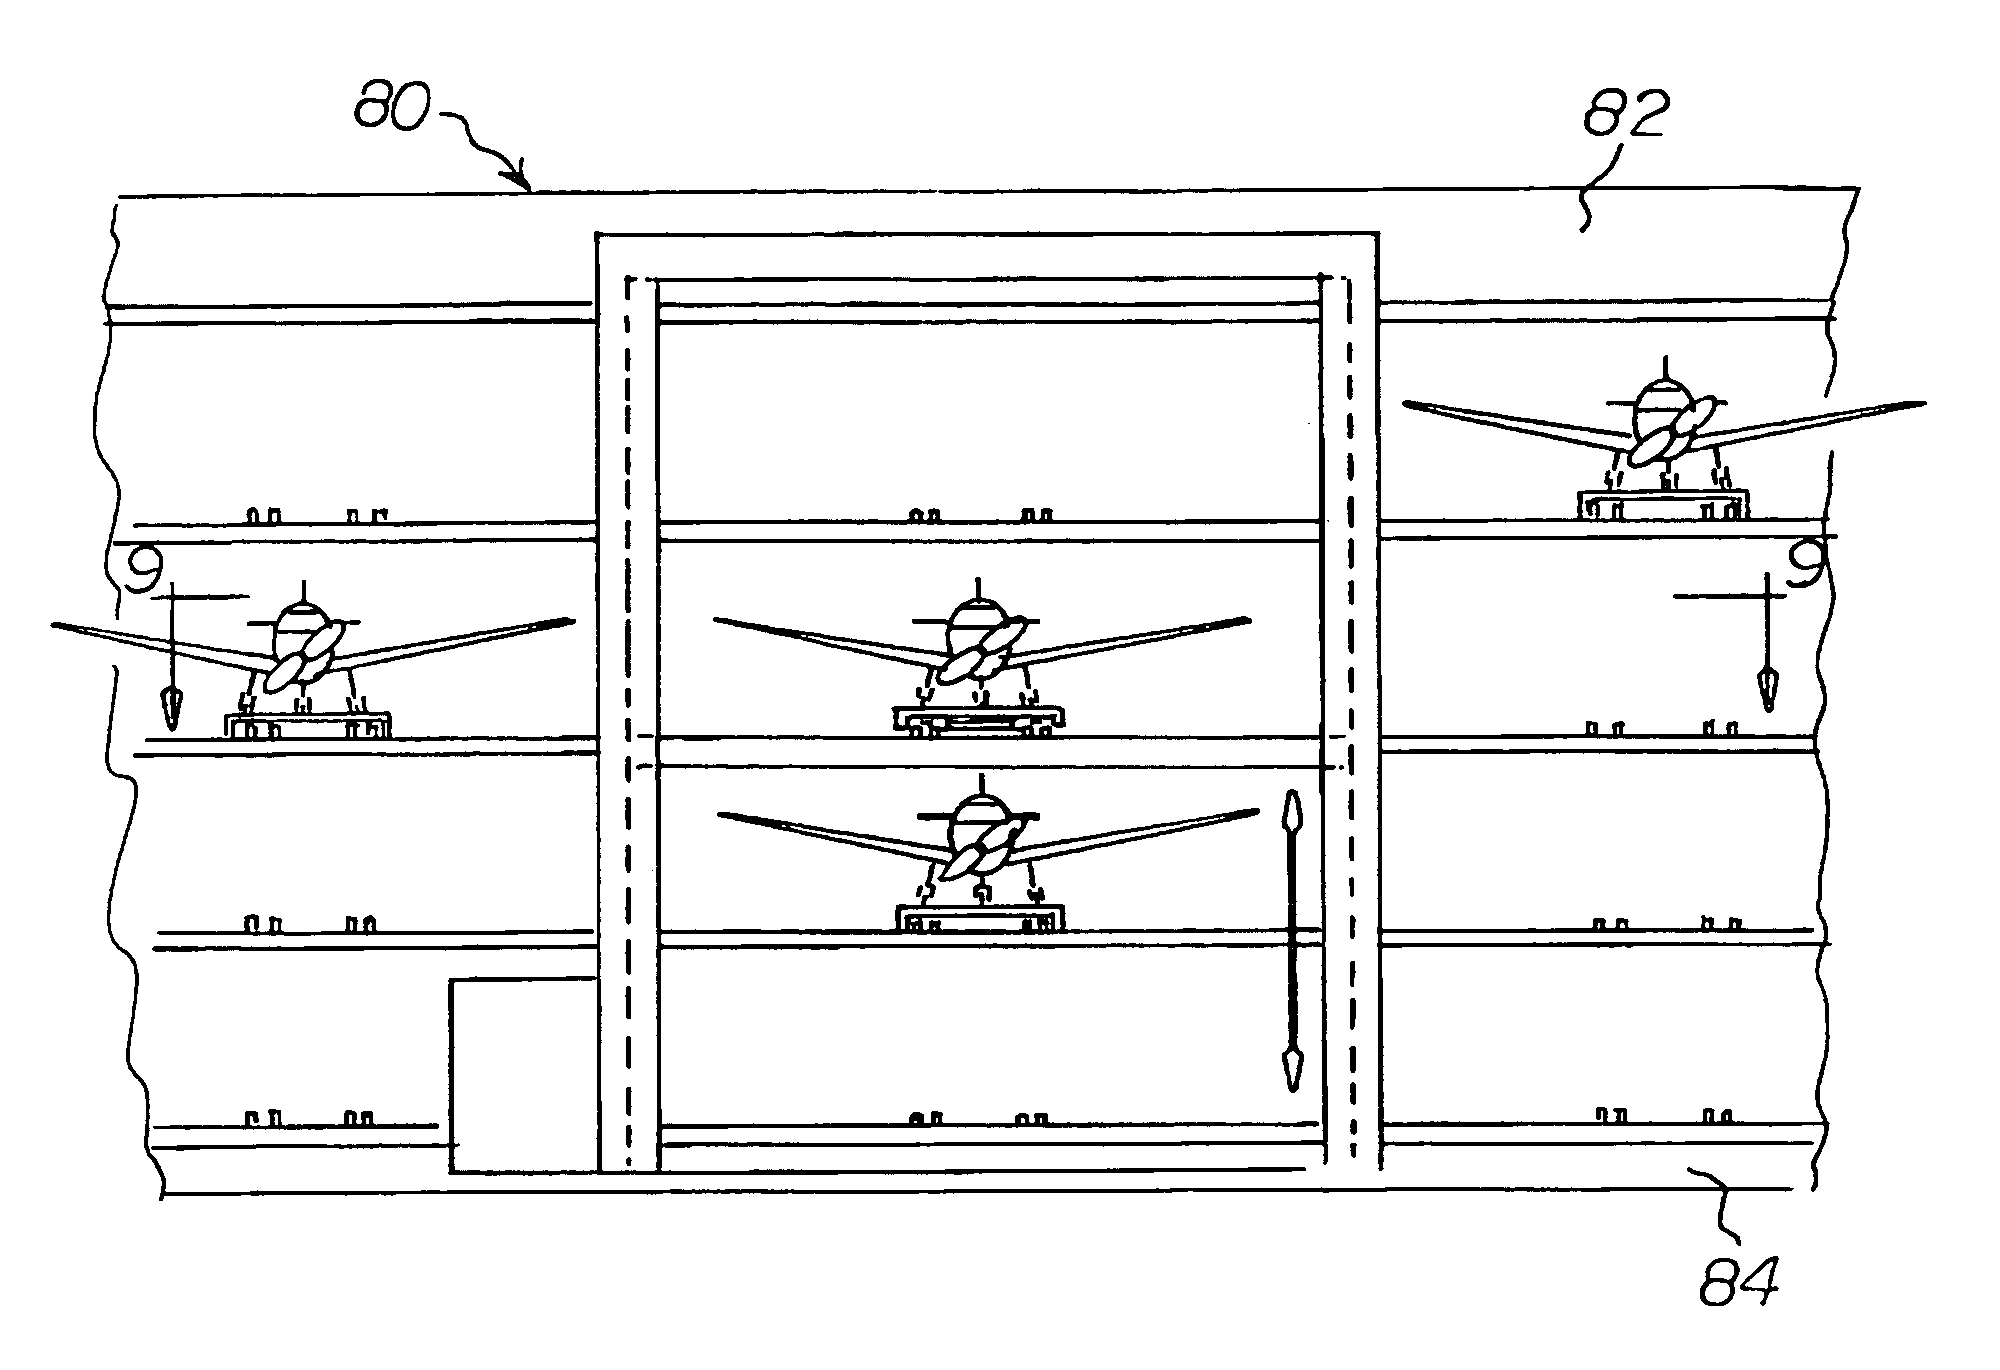 Multilevel vertical general aviation hangar